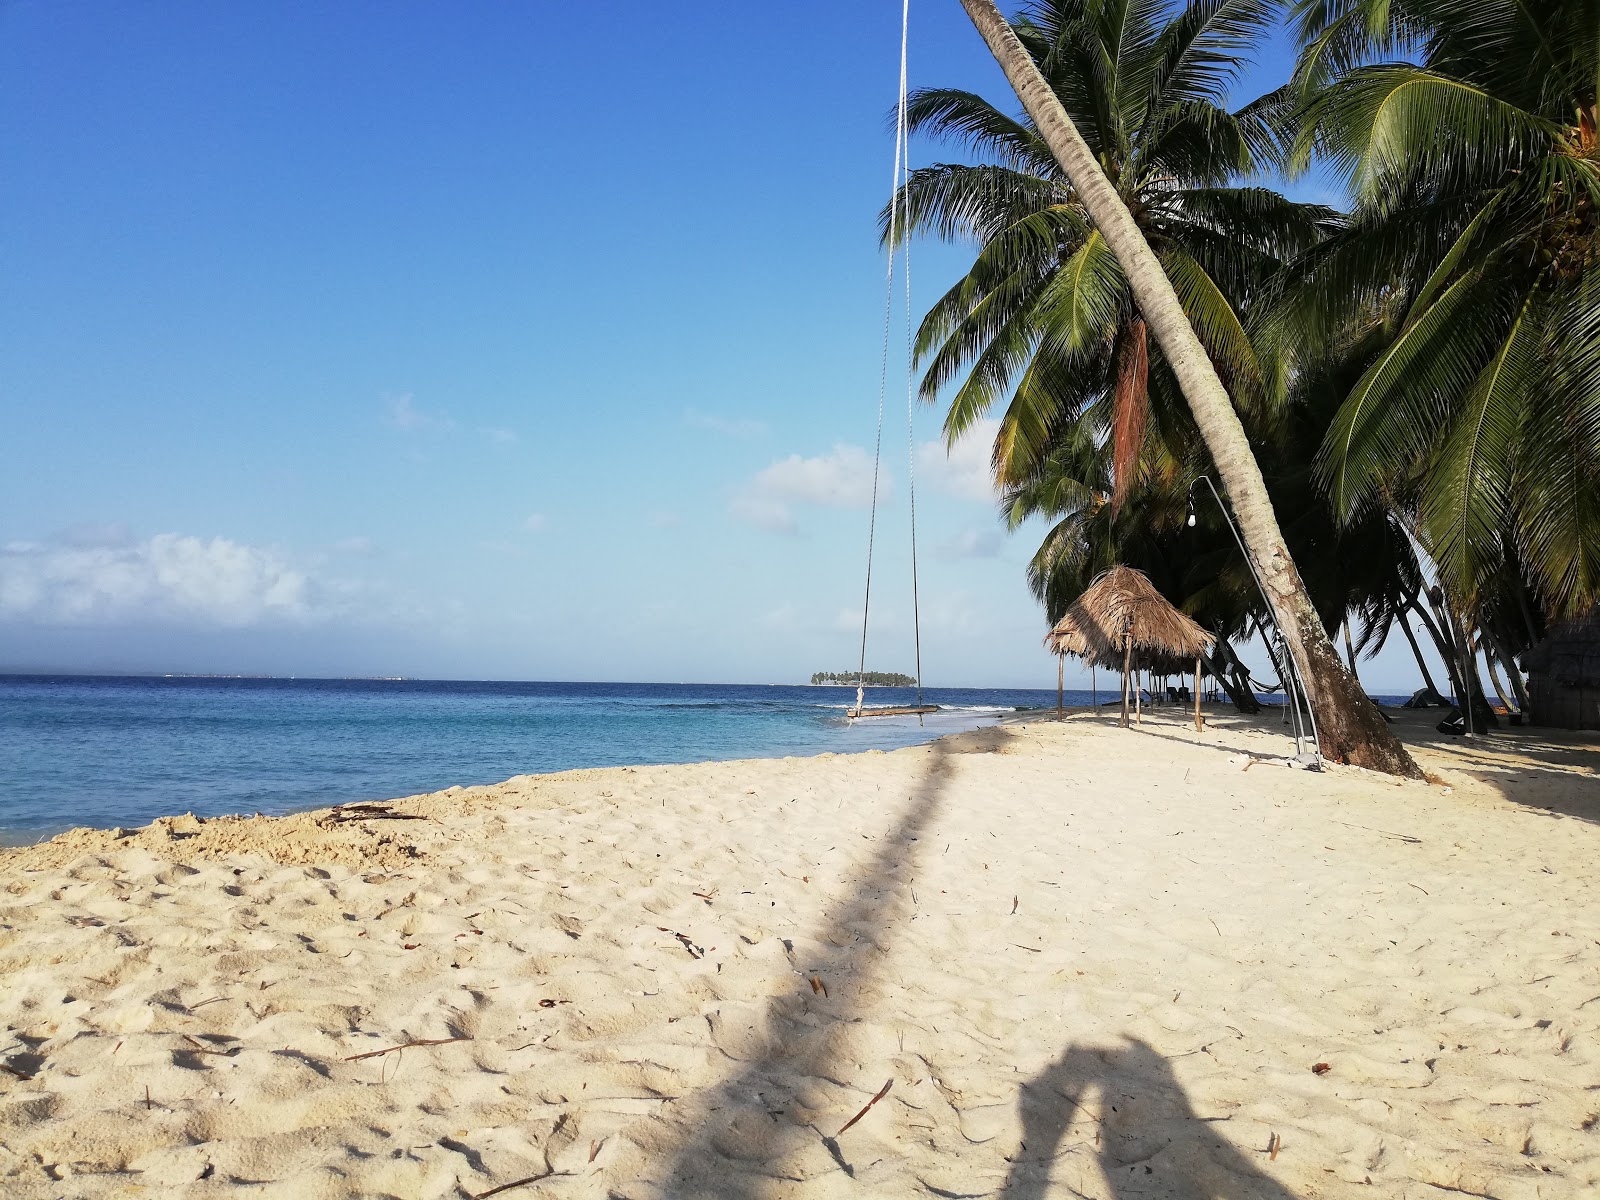 Fotografija Plaža otoka Anzuelo nahaja se v naravnem okolju